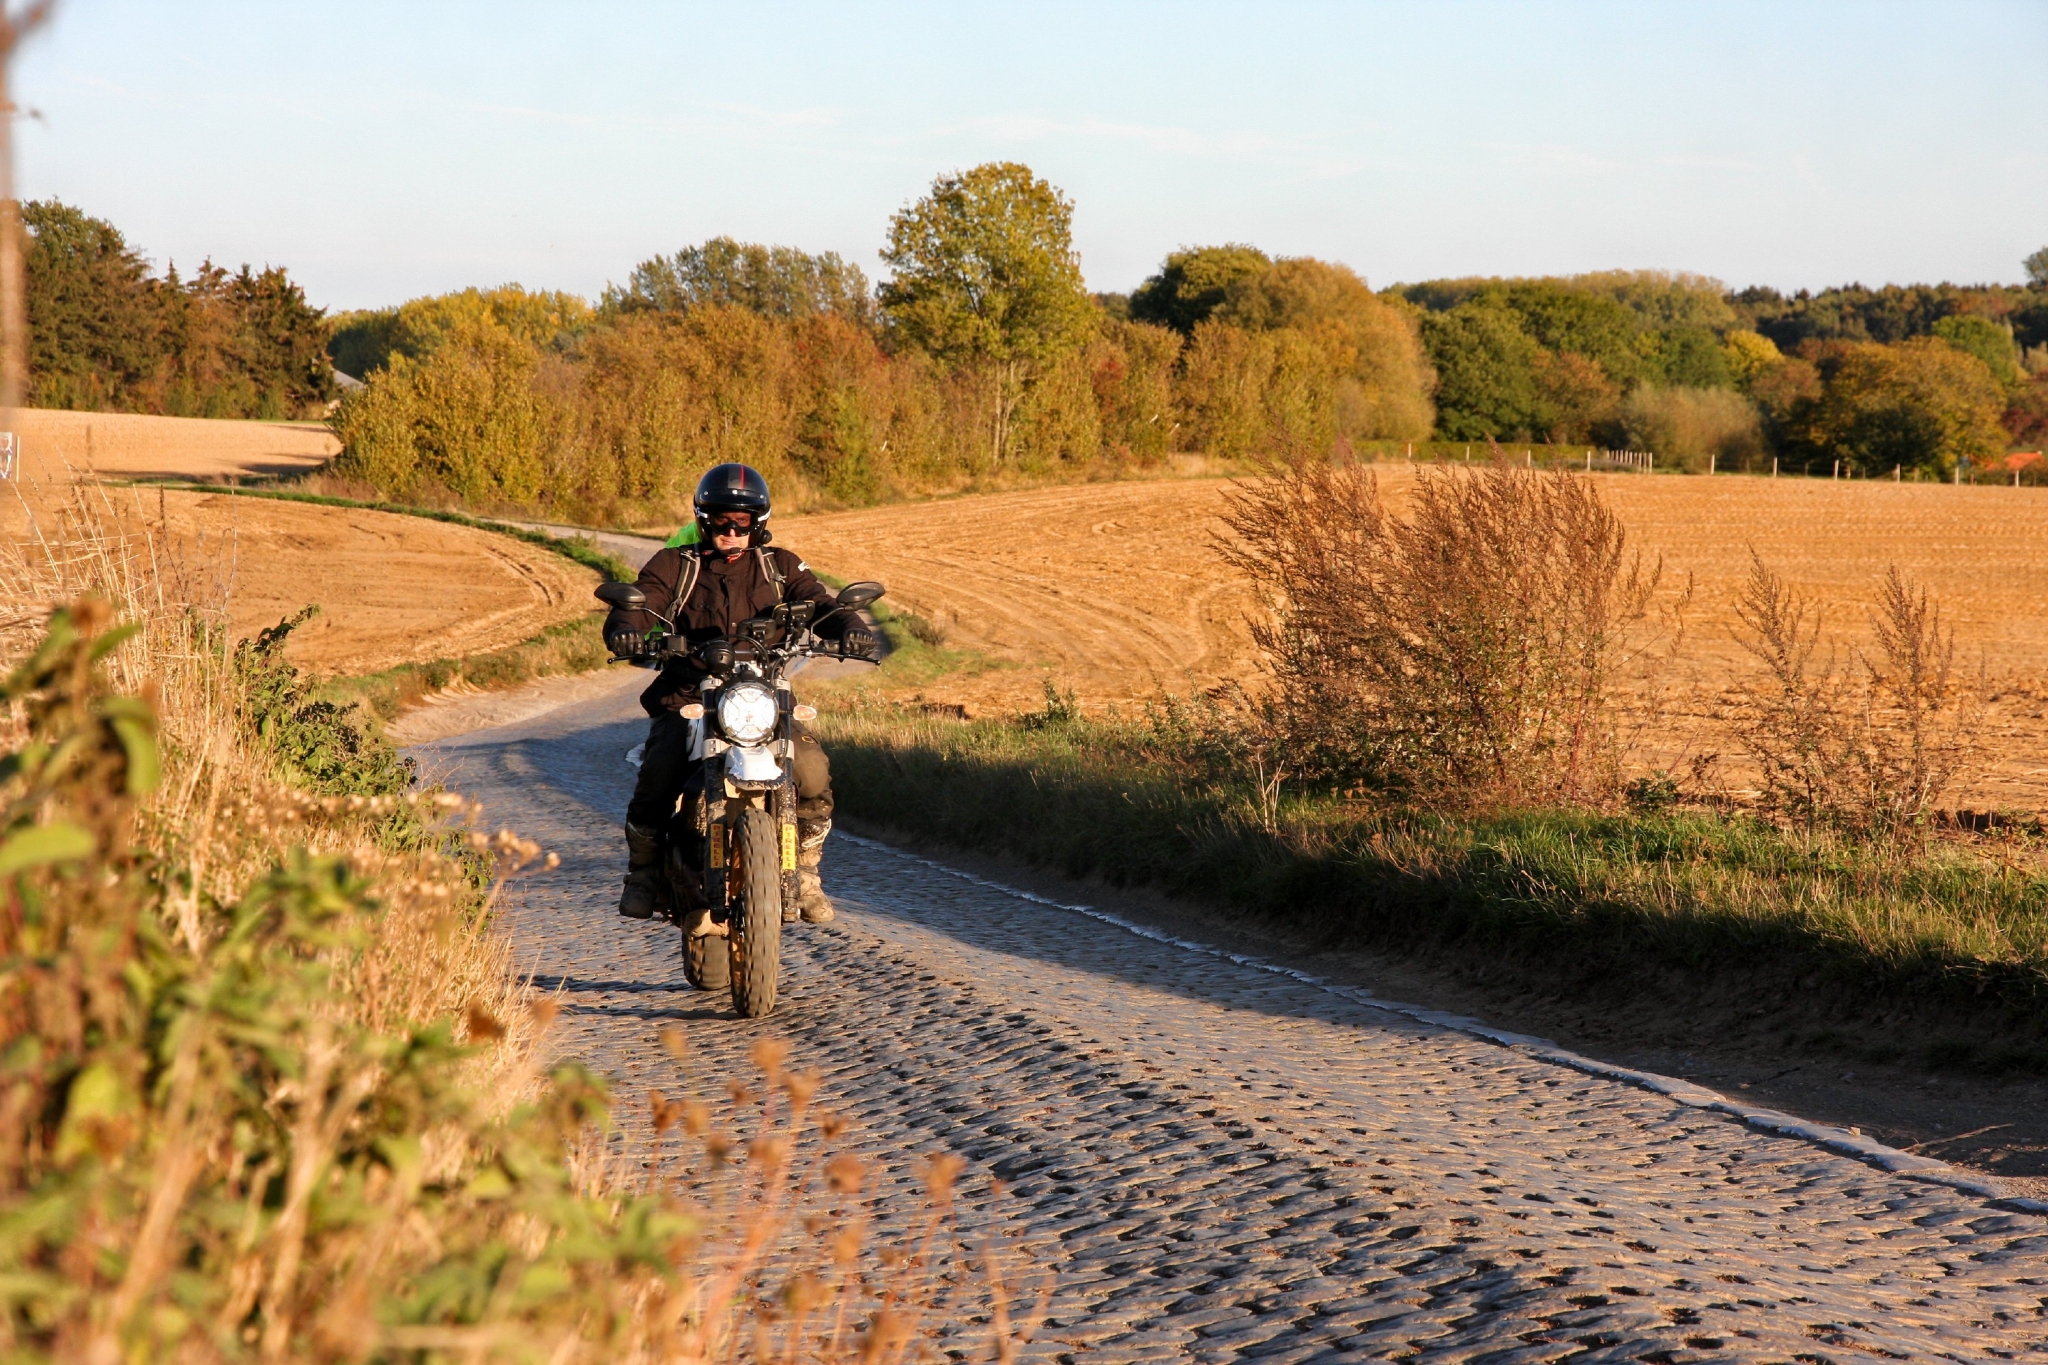 motorrad tour belgien